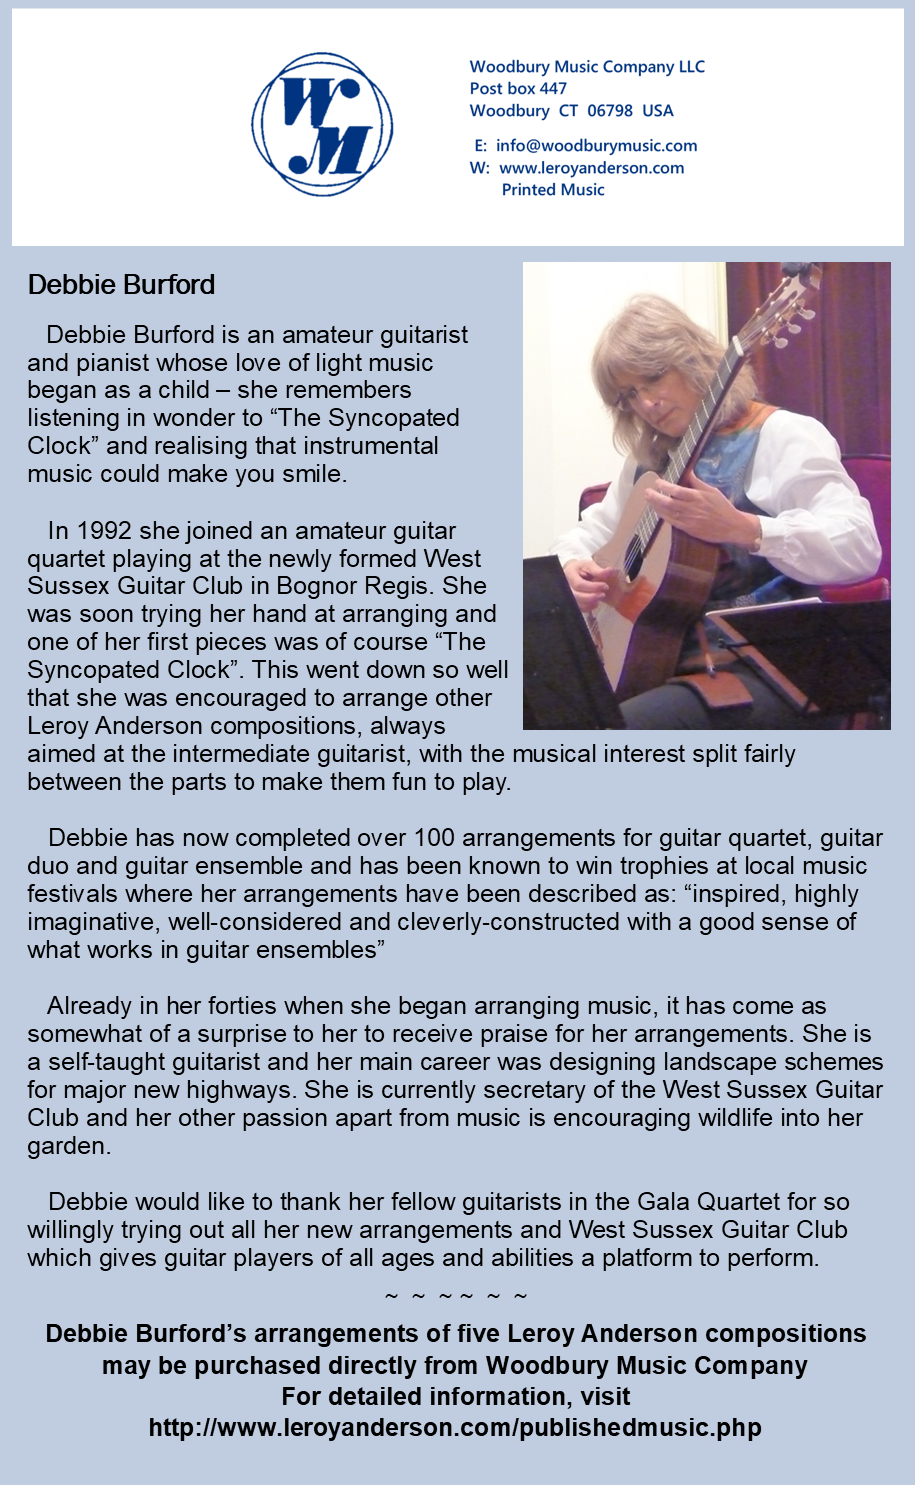 Debbie Burford, guitarist, arranger